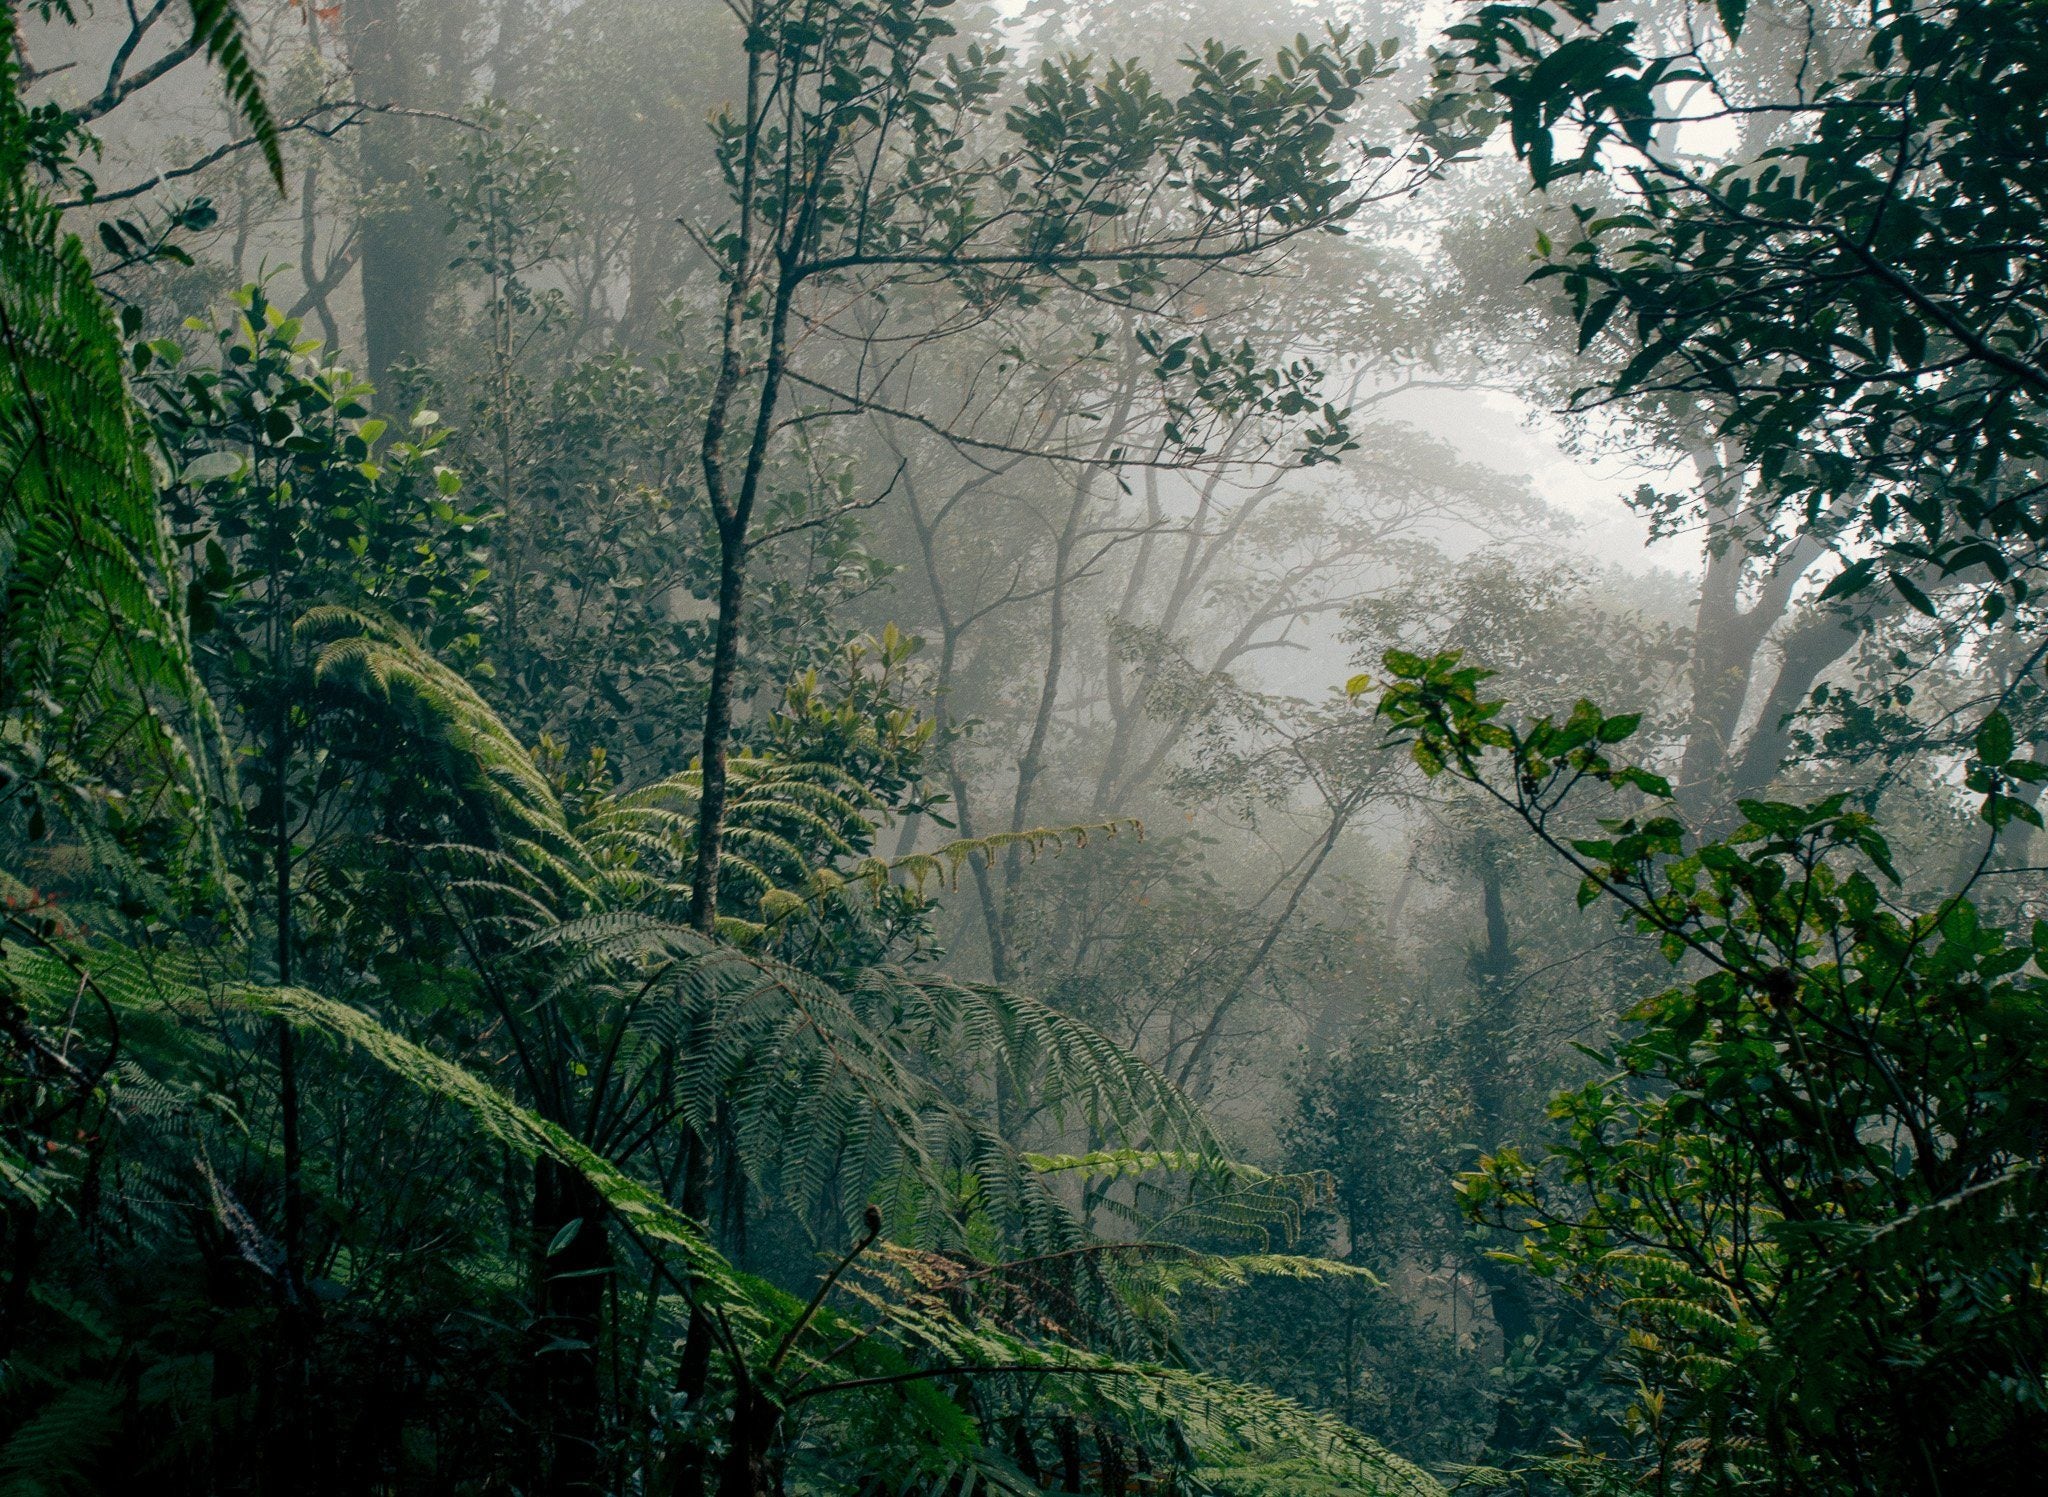 Borneo rainforest on a misty, damp day